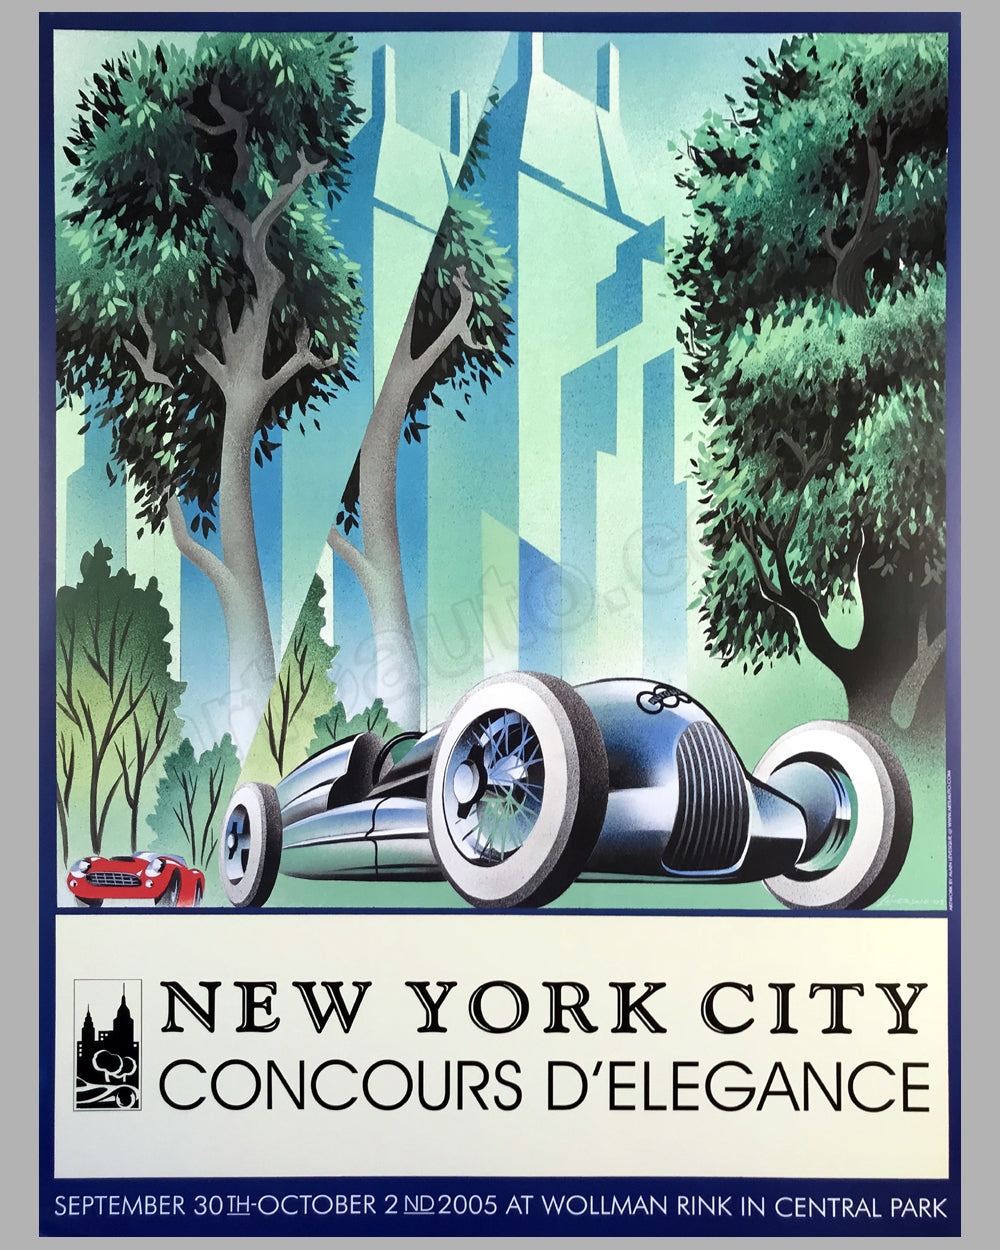 New York City Concours d'Elegance poster 2005 by Alain Lévesque